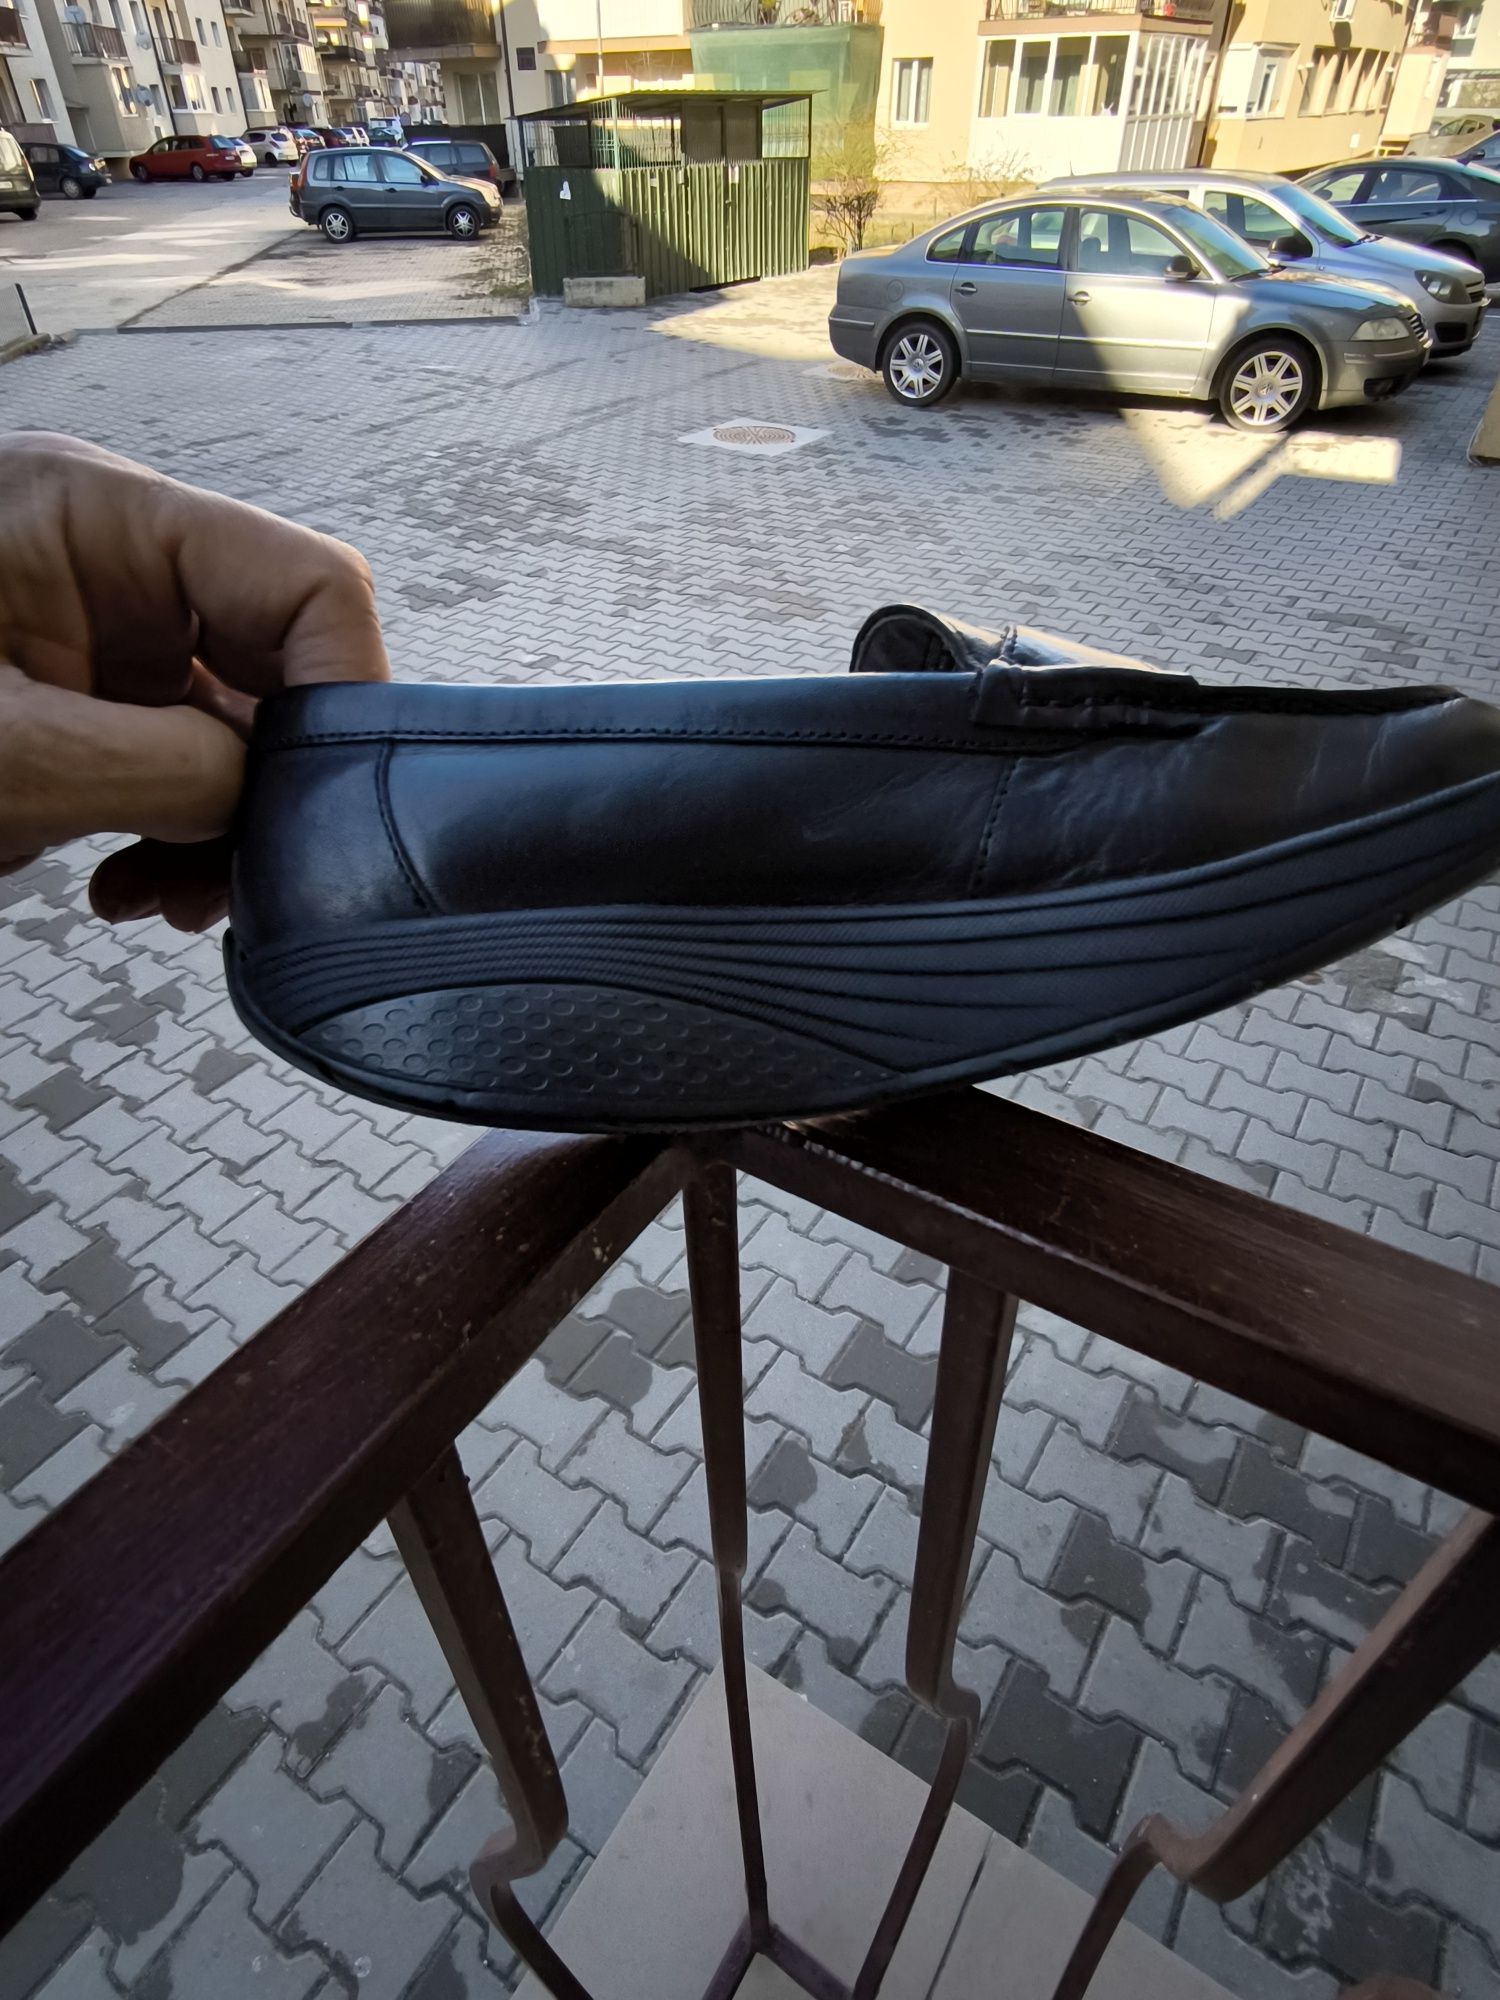 Preț fix,Pantofi MBT din piele naturala Nr37 Int24,7cm nu Nike Adidas